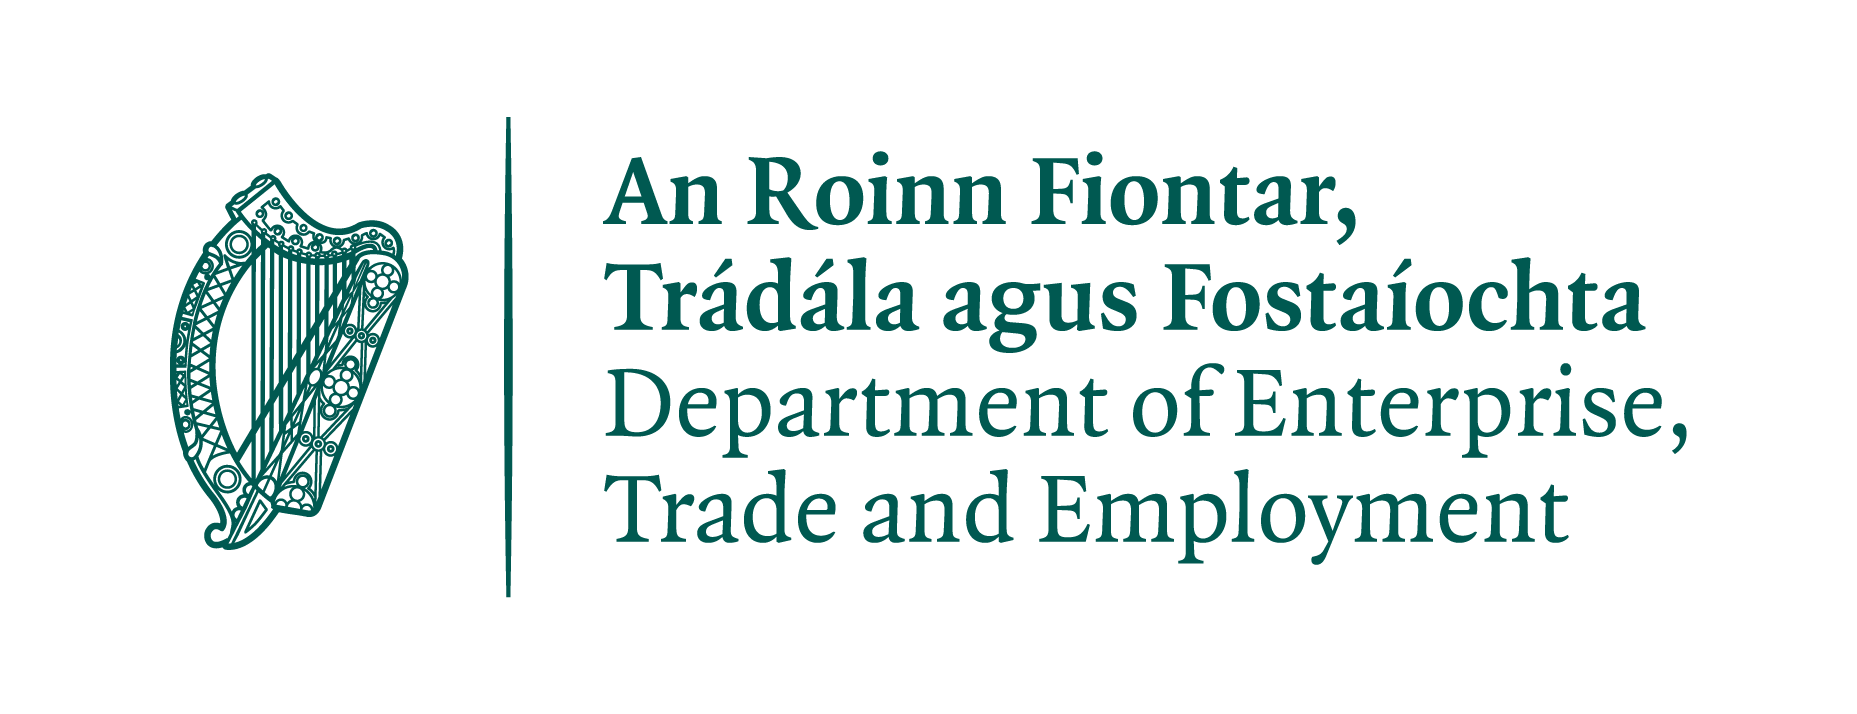 Department of Enterprise, Trade, Employment Logo